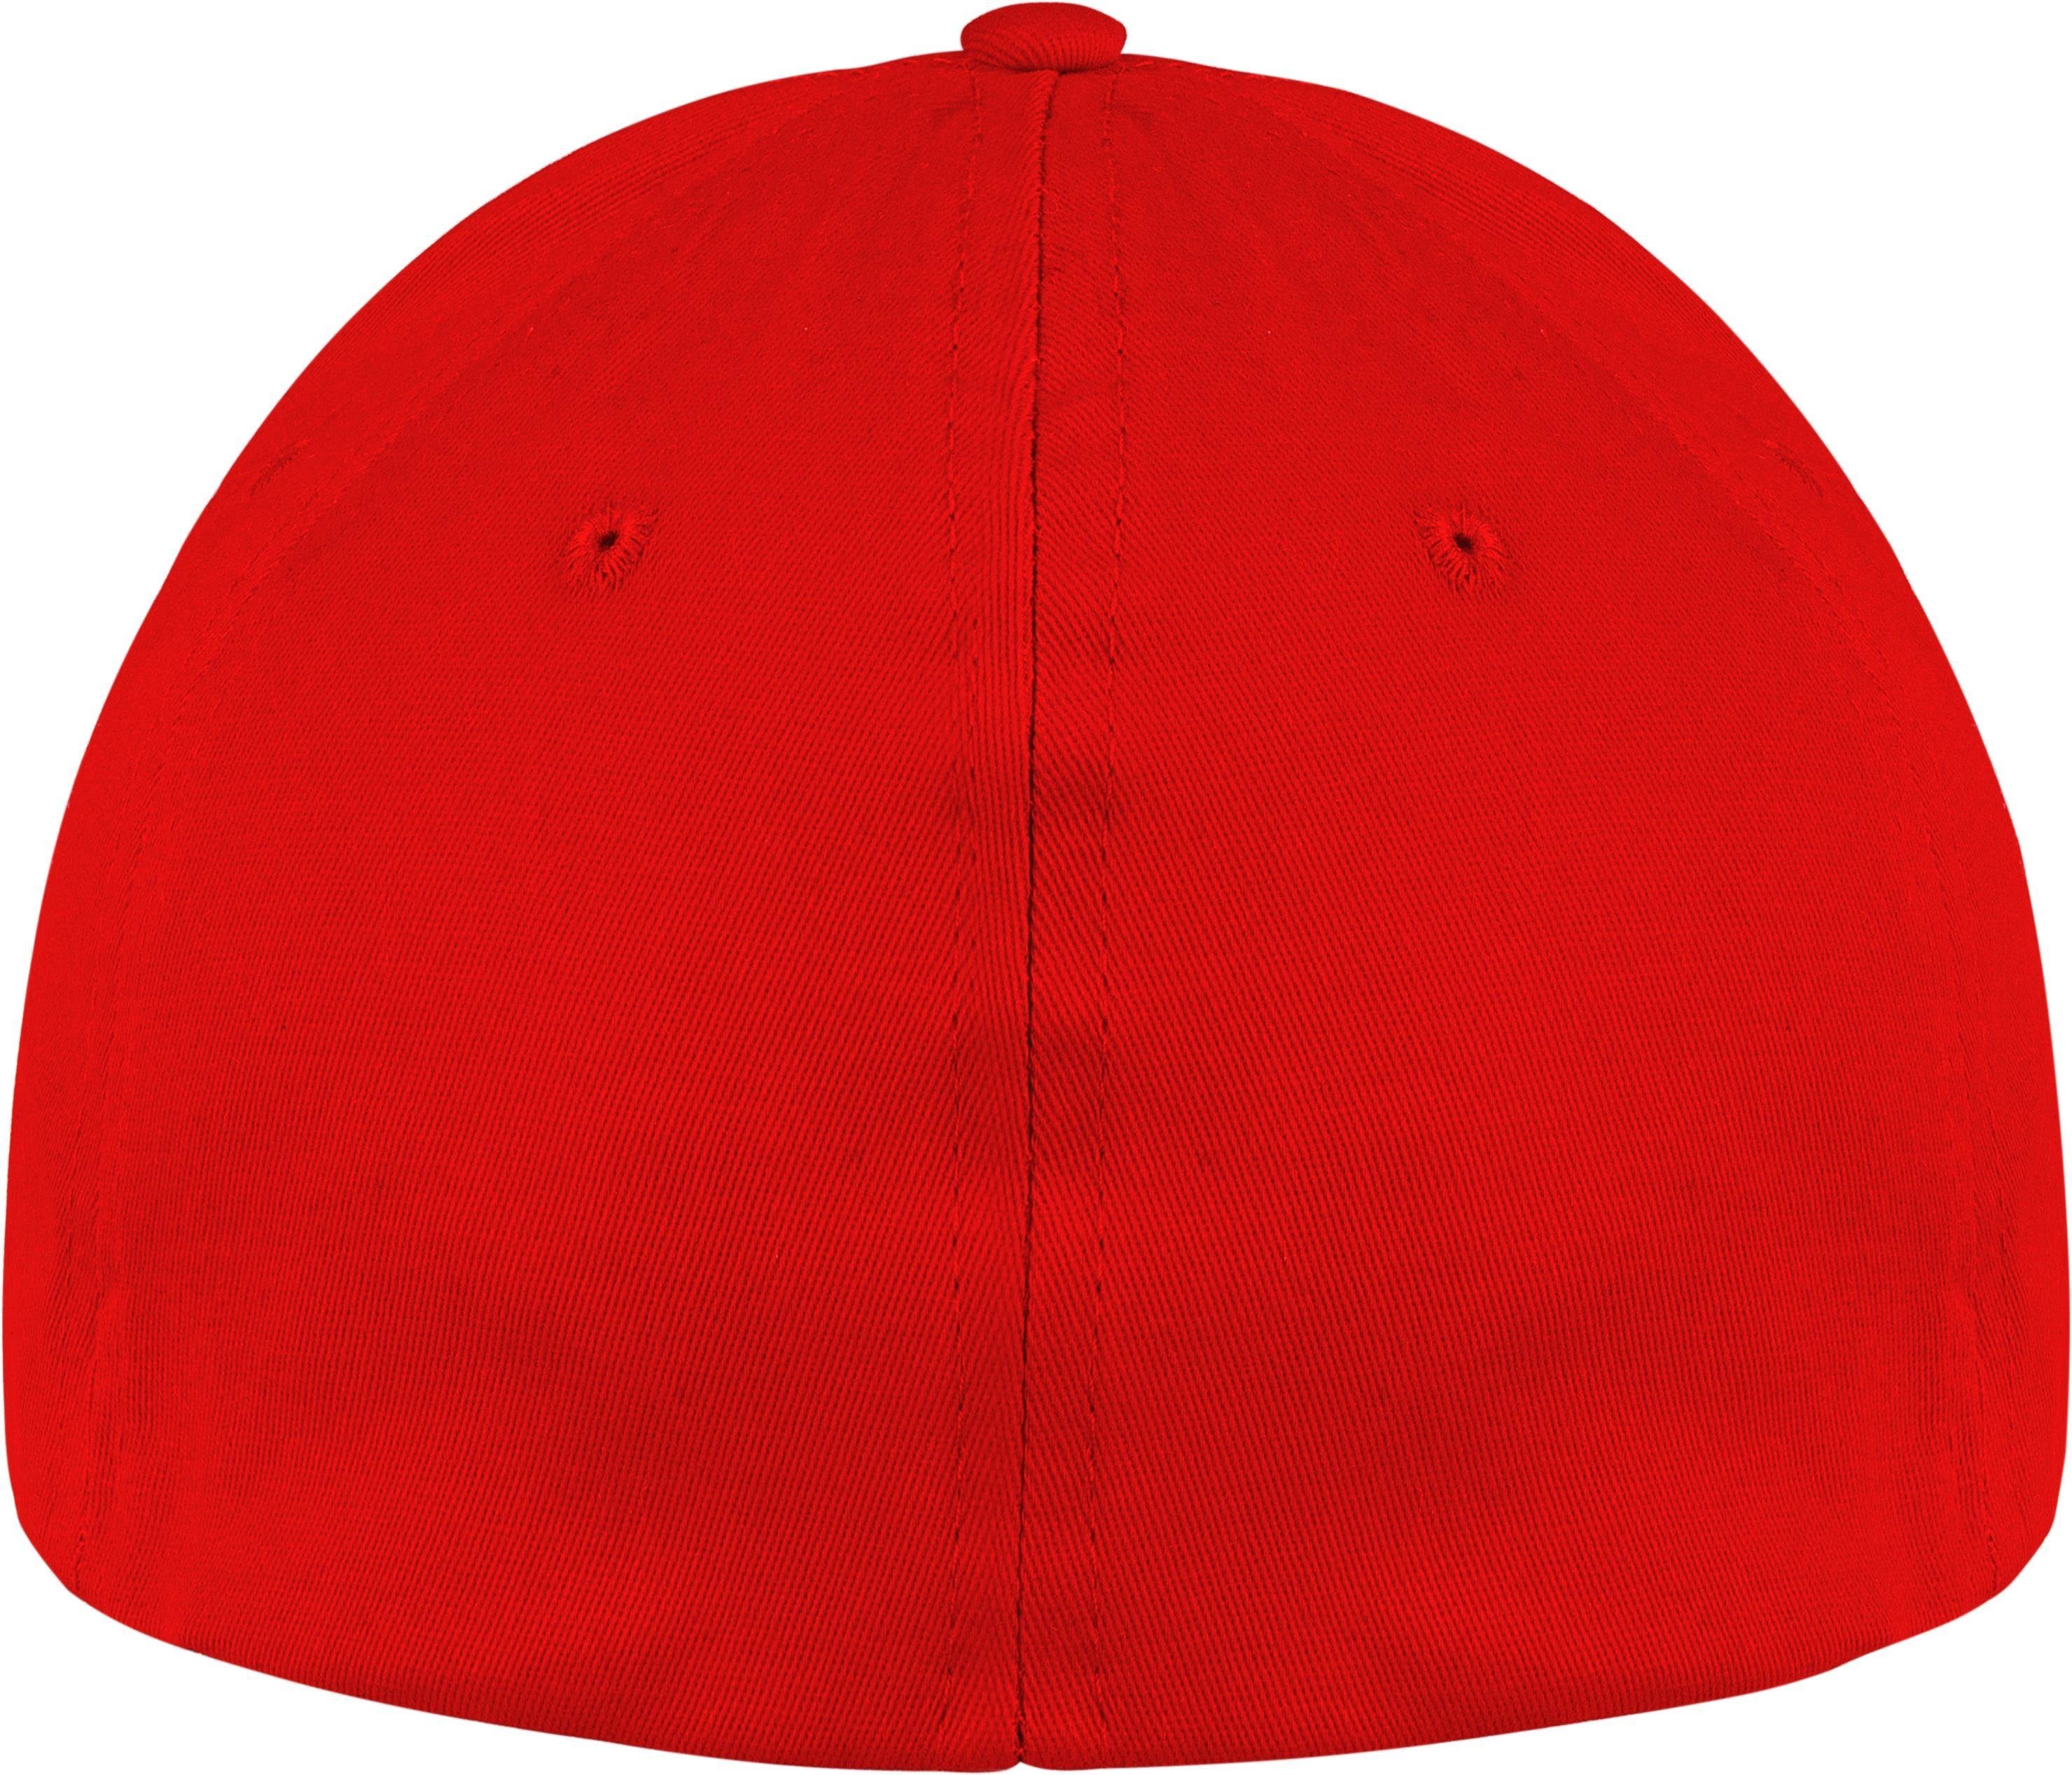 Sommercap Sommercap mit Atmungsaktive Cap normani Rot Sommermütze Neys Sonnenschutz Baseball